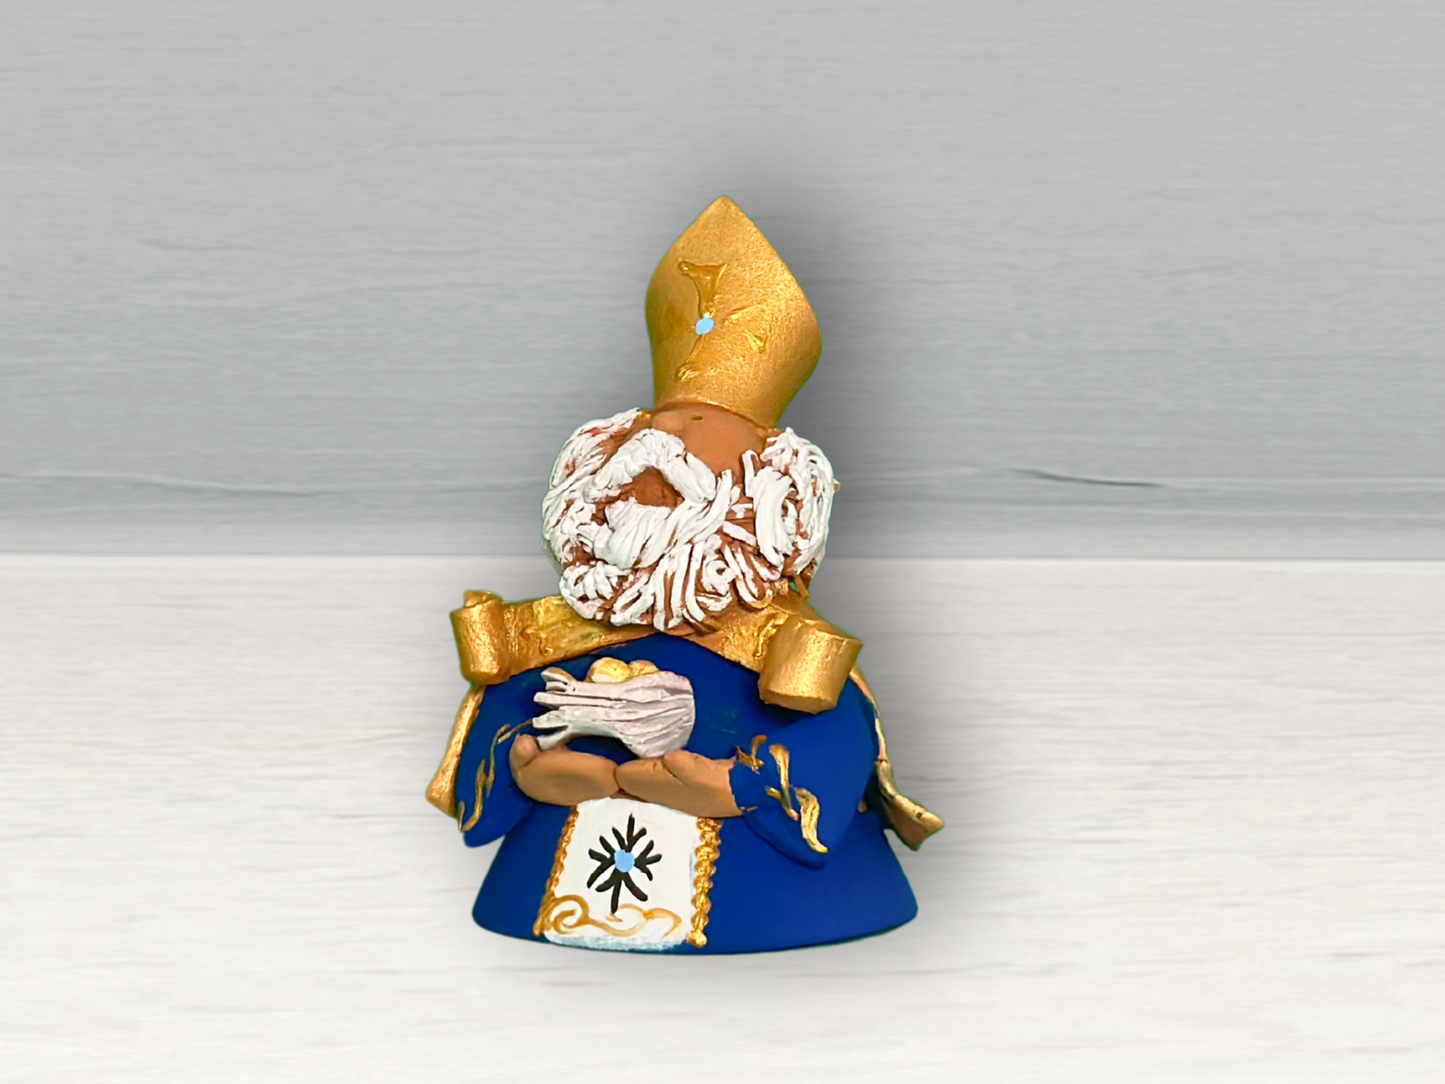 San Nicola mignon cm 10 in terracotta